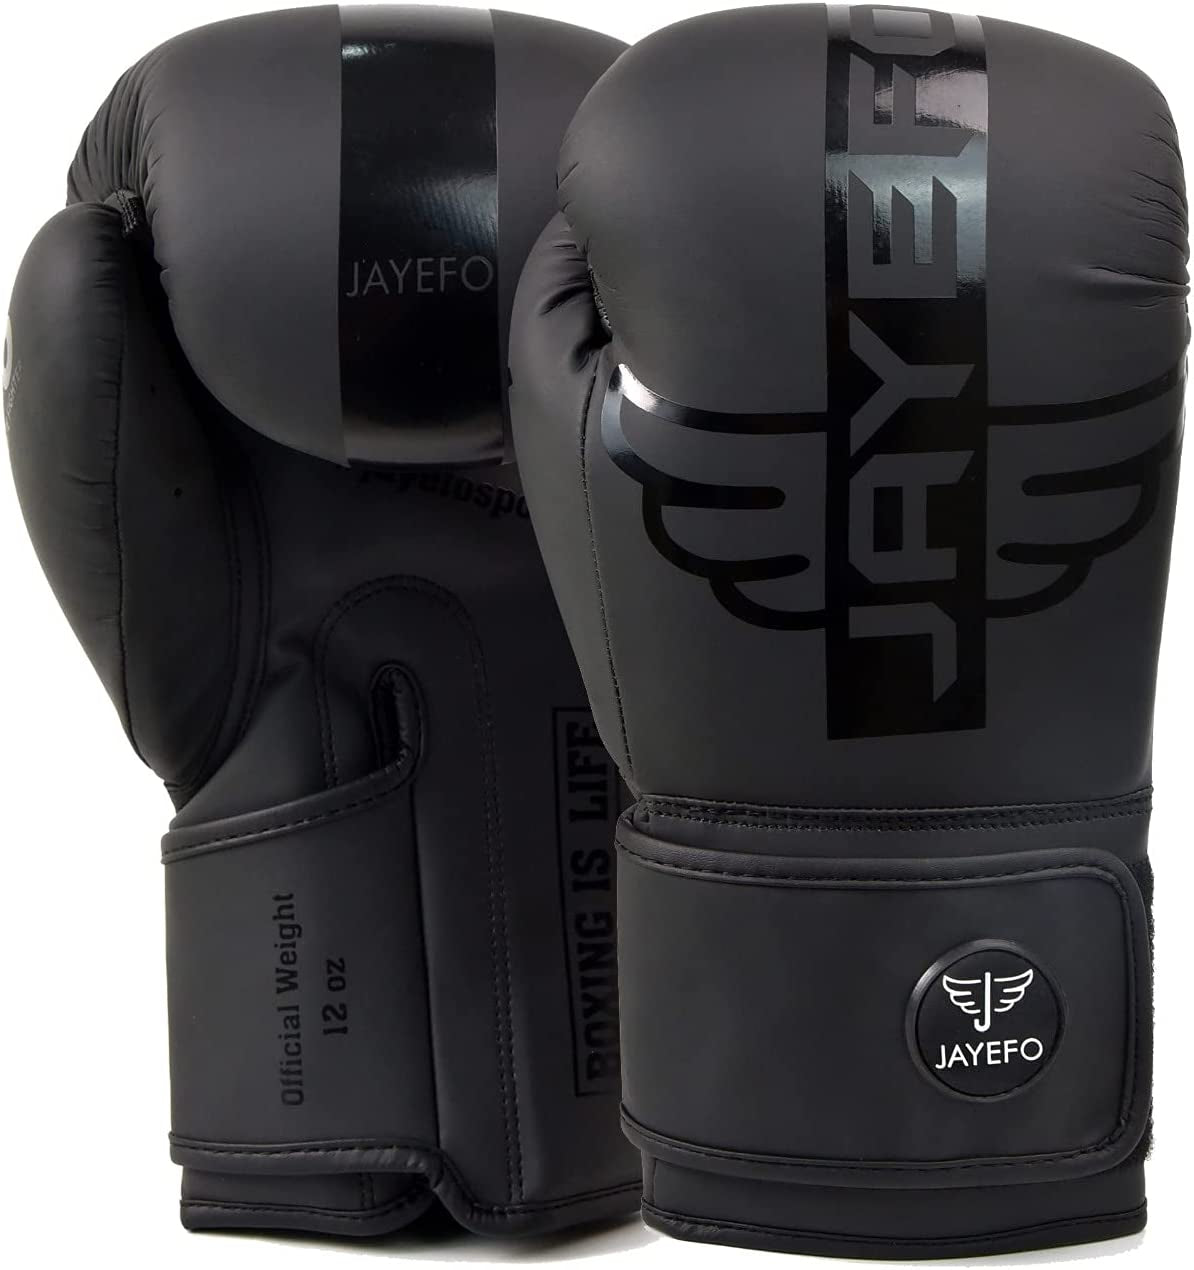 R-6 Boxing Gloves for Men & Women Sparring Heavy Punching Bag MMA Muay Thai Kickboxing Mitts